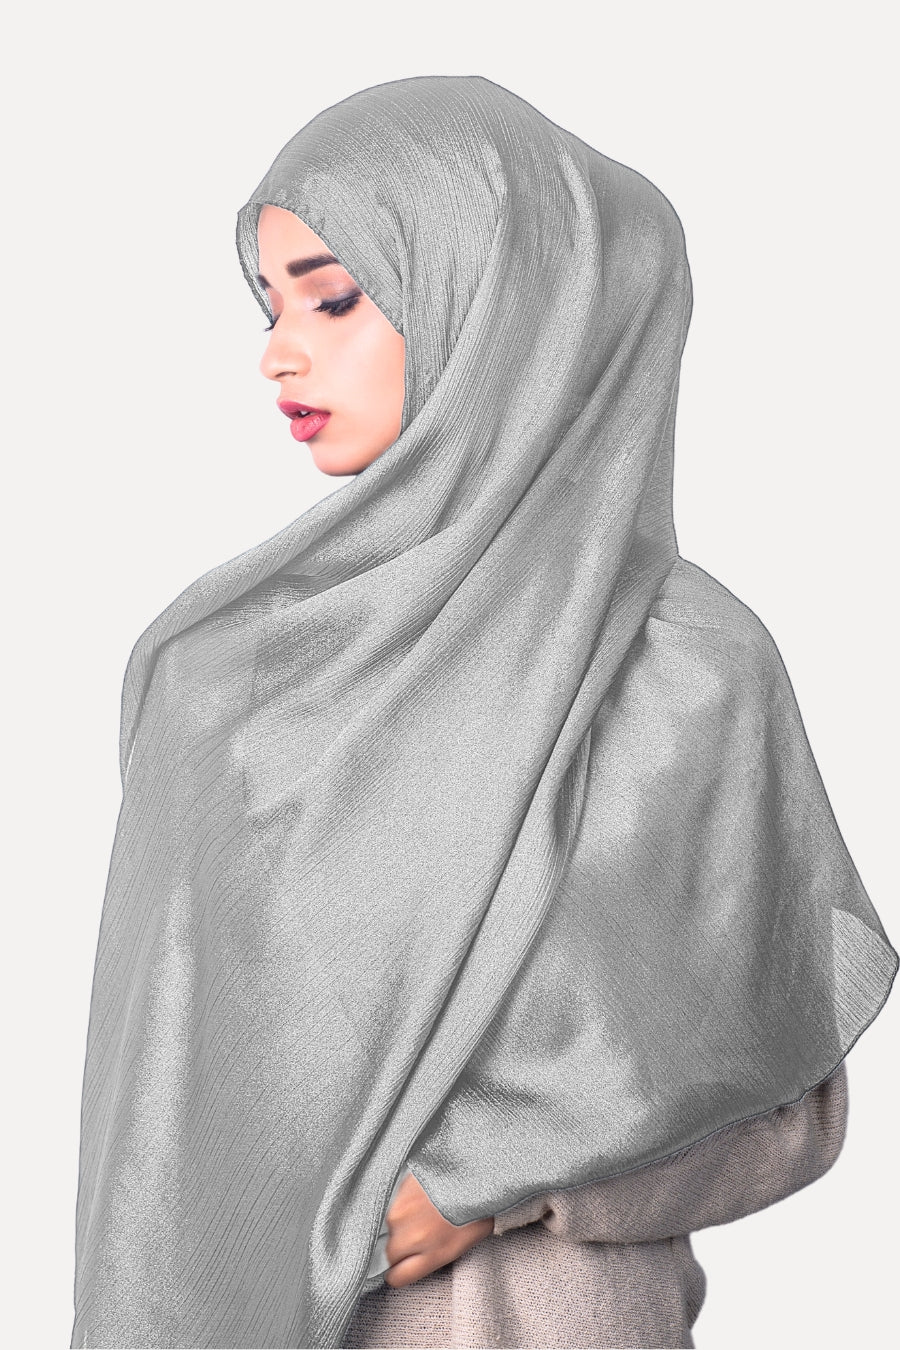 Crinkle Chiffon Hijab - Silver (Shimmer)